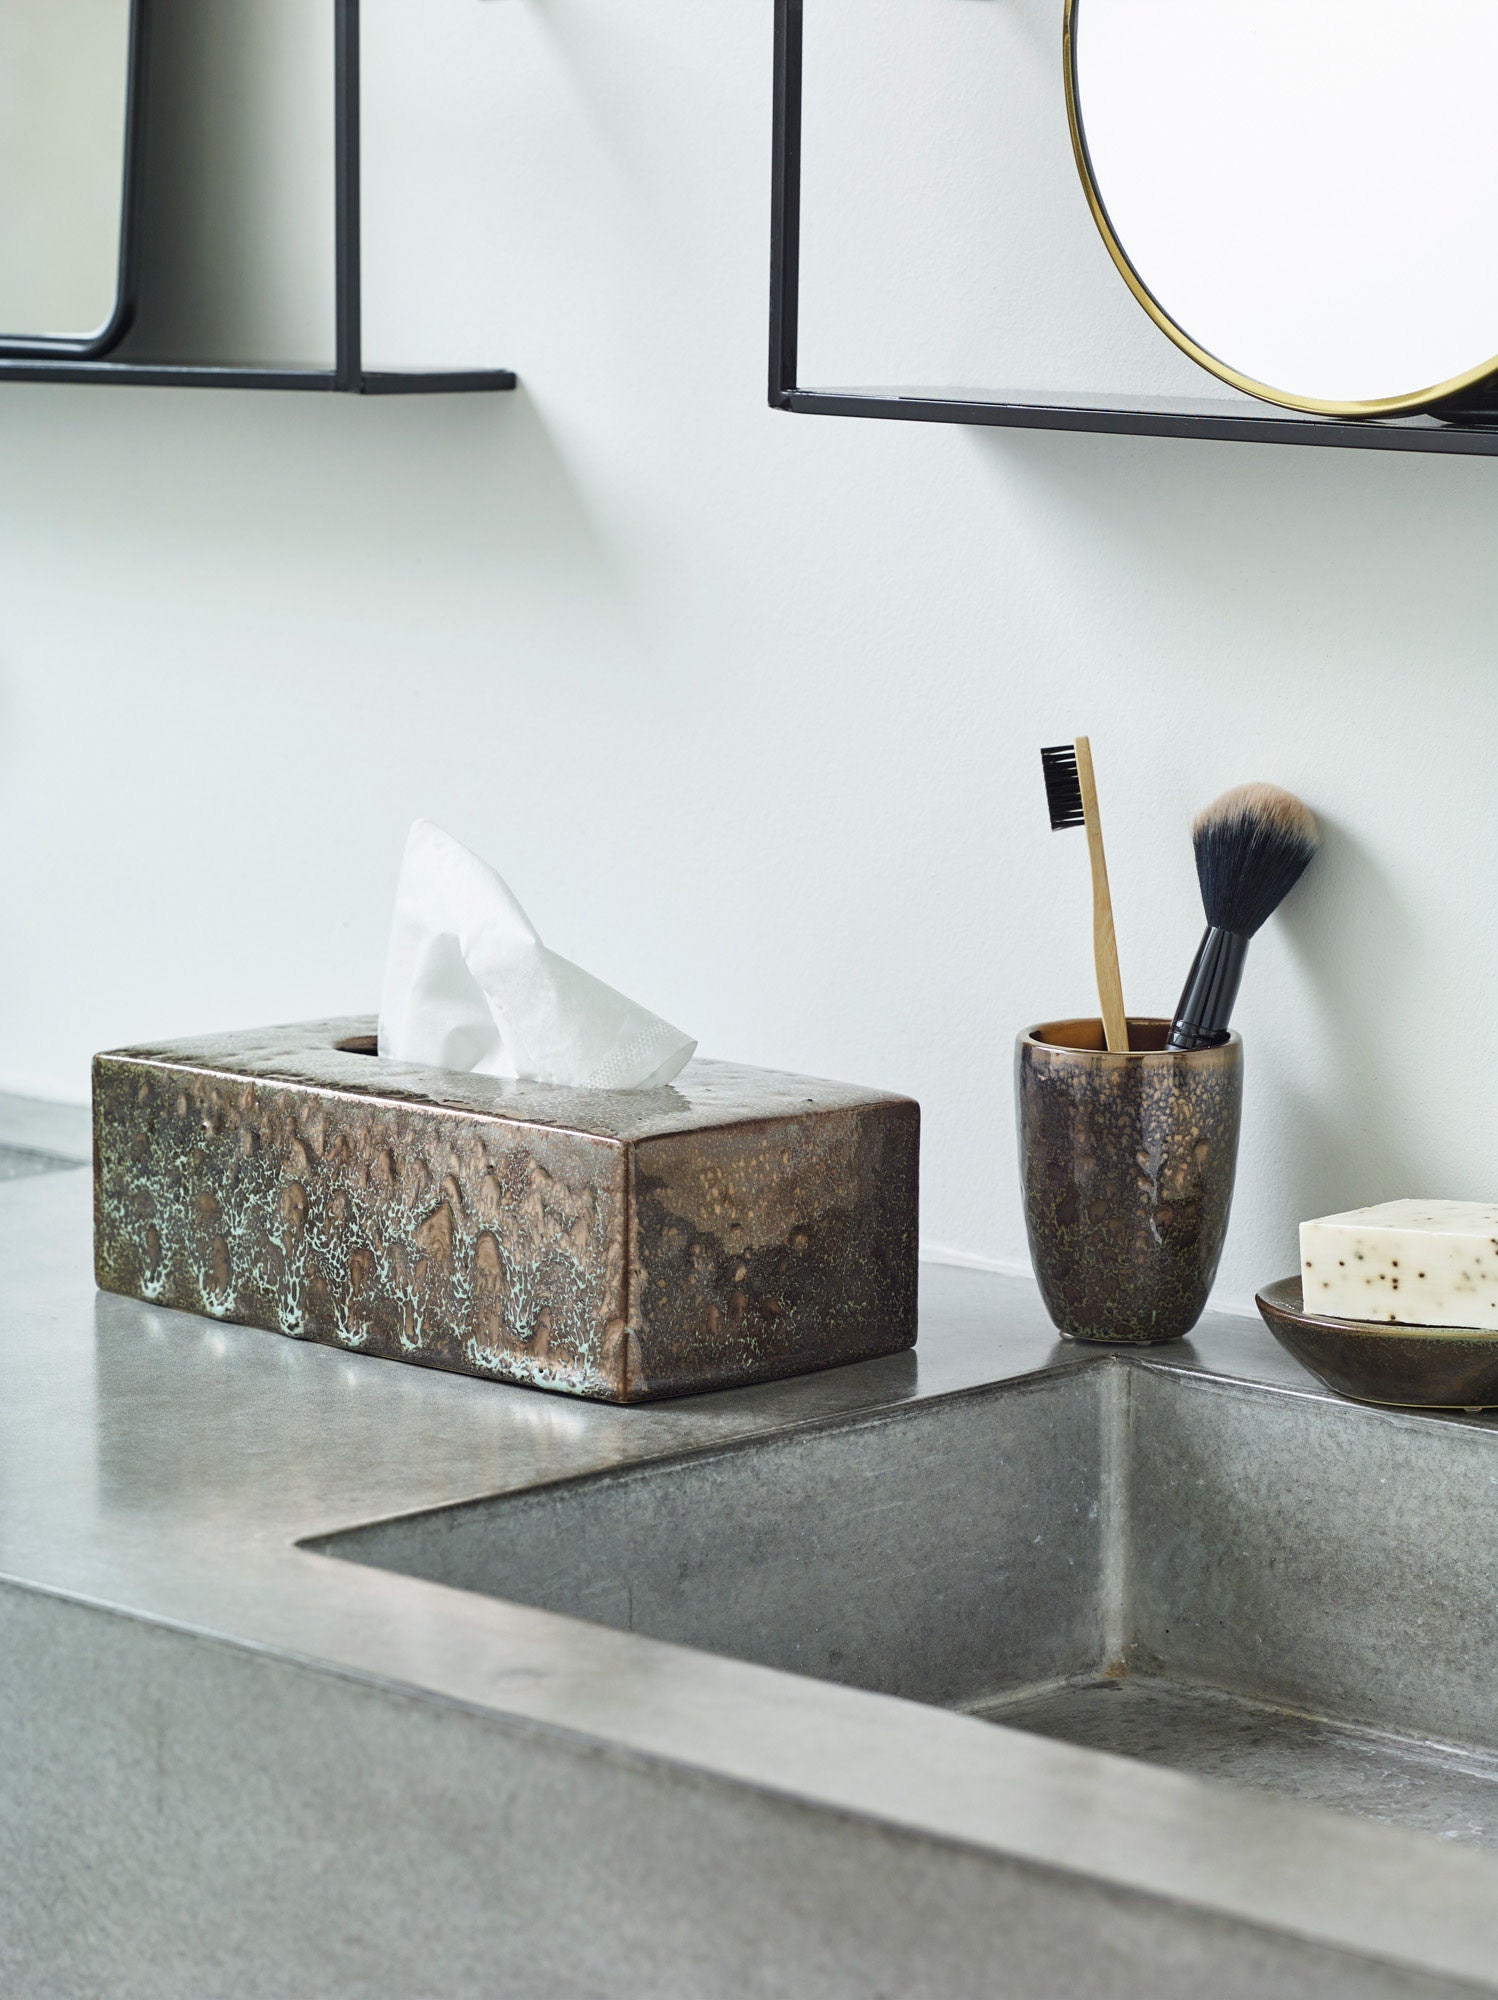 Vintage Bronze Bathroom Accessories - Toilet Brush Holder - |VESIMI Design| Luxury and Rustic bathrooms online